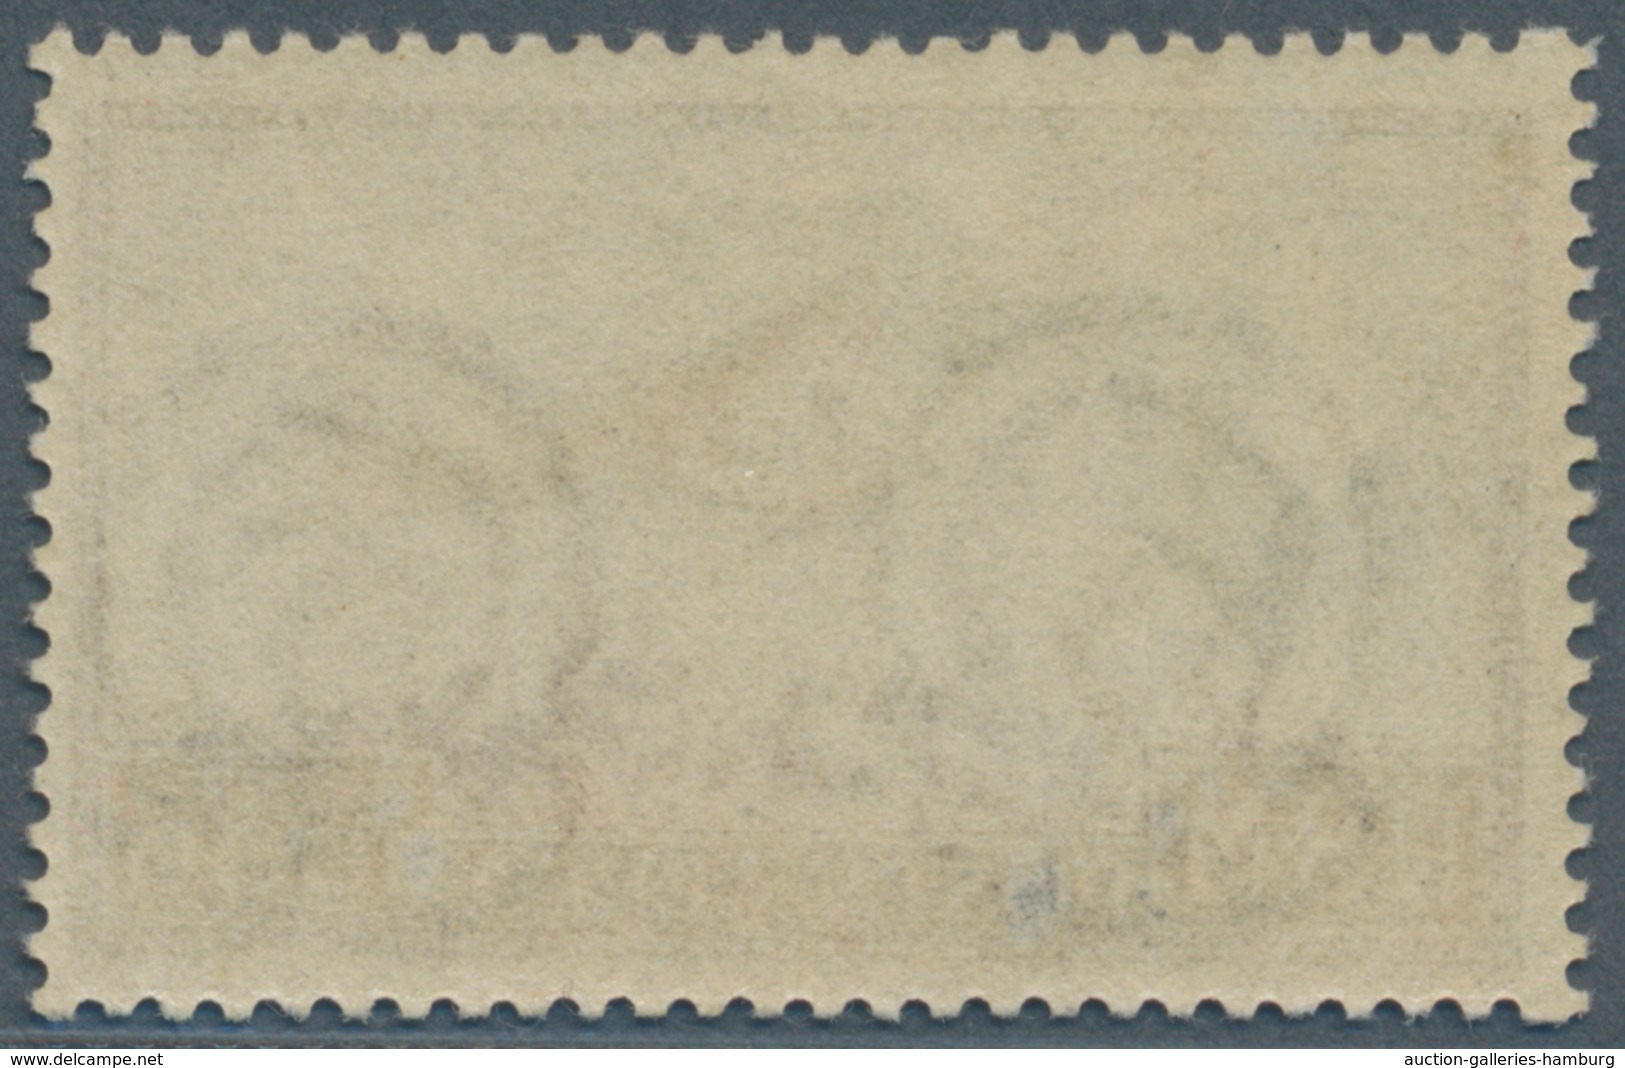 San Marino: 1951, 1000 Lire Airmail Stamp, Mint Never Hinged - Usados